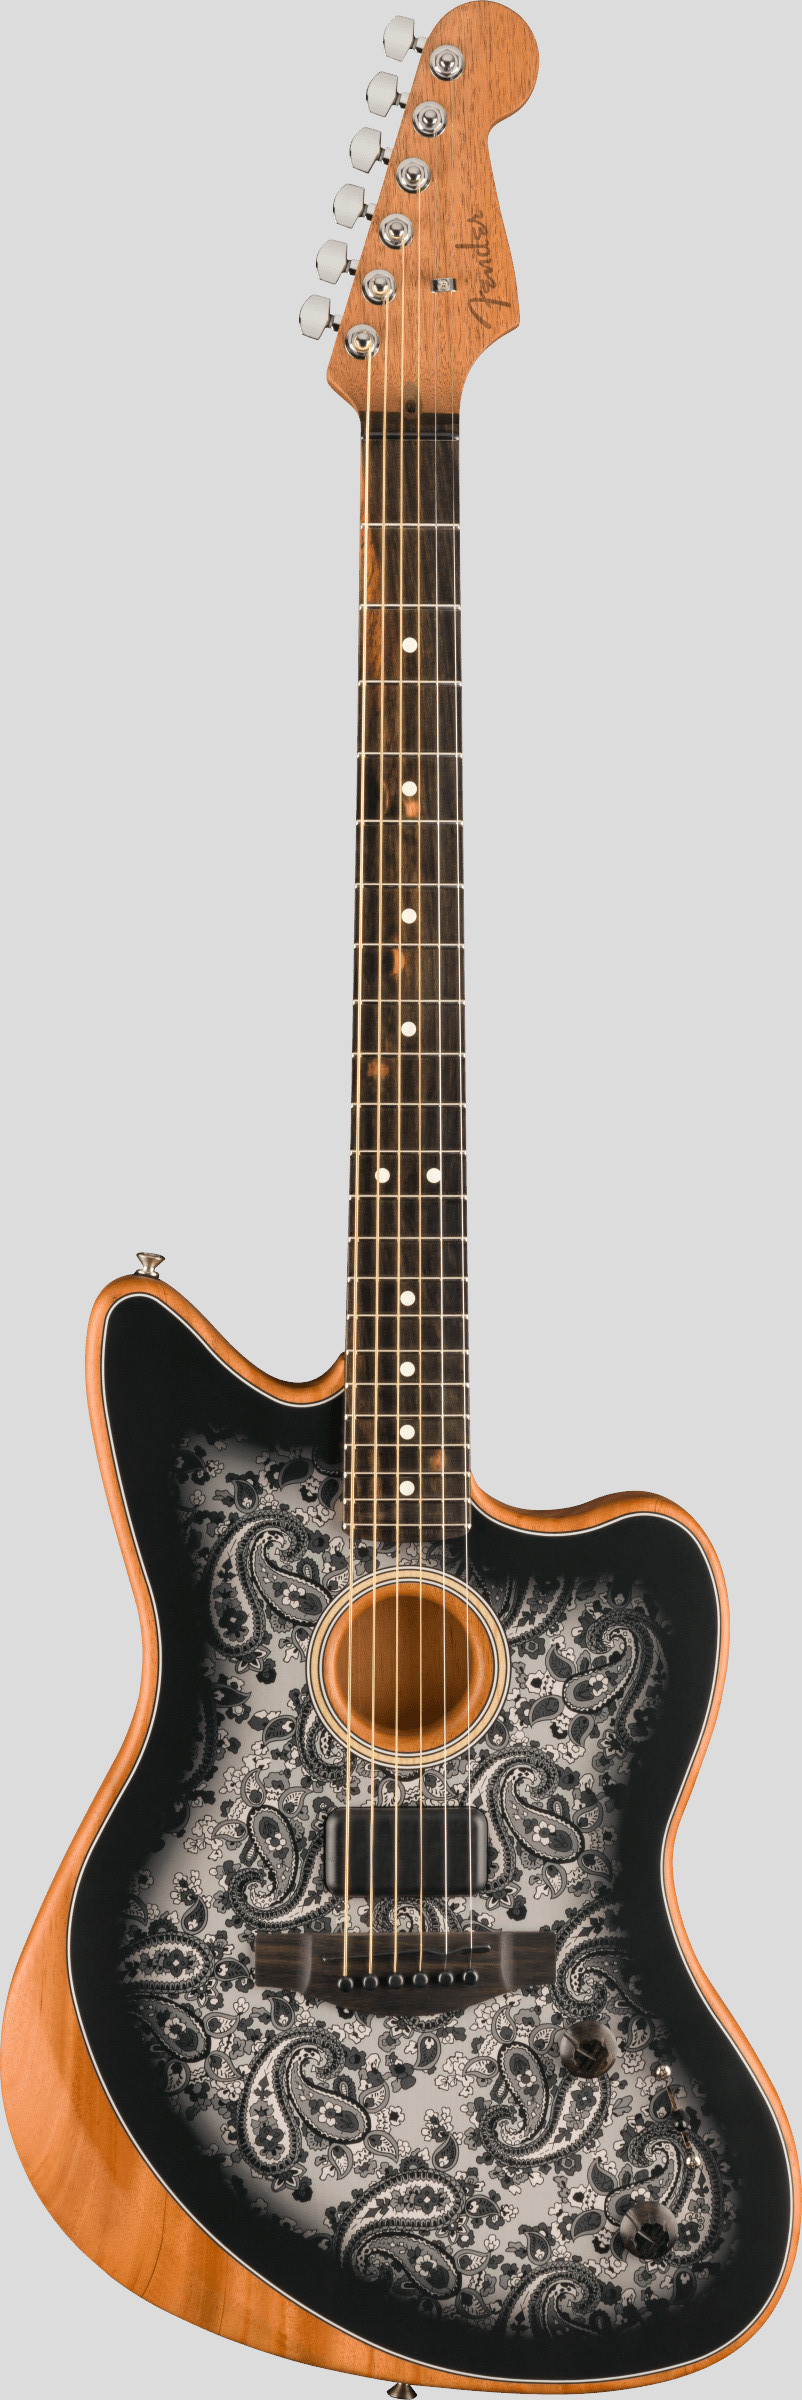 Fender Limited Edition American Acoustasonic Jazzmaster Black Paisley 1